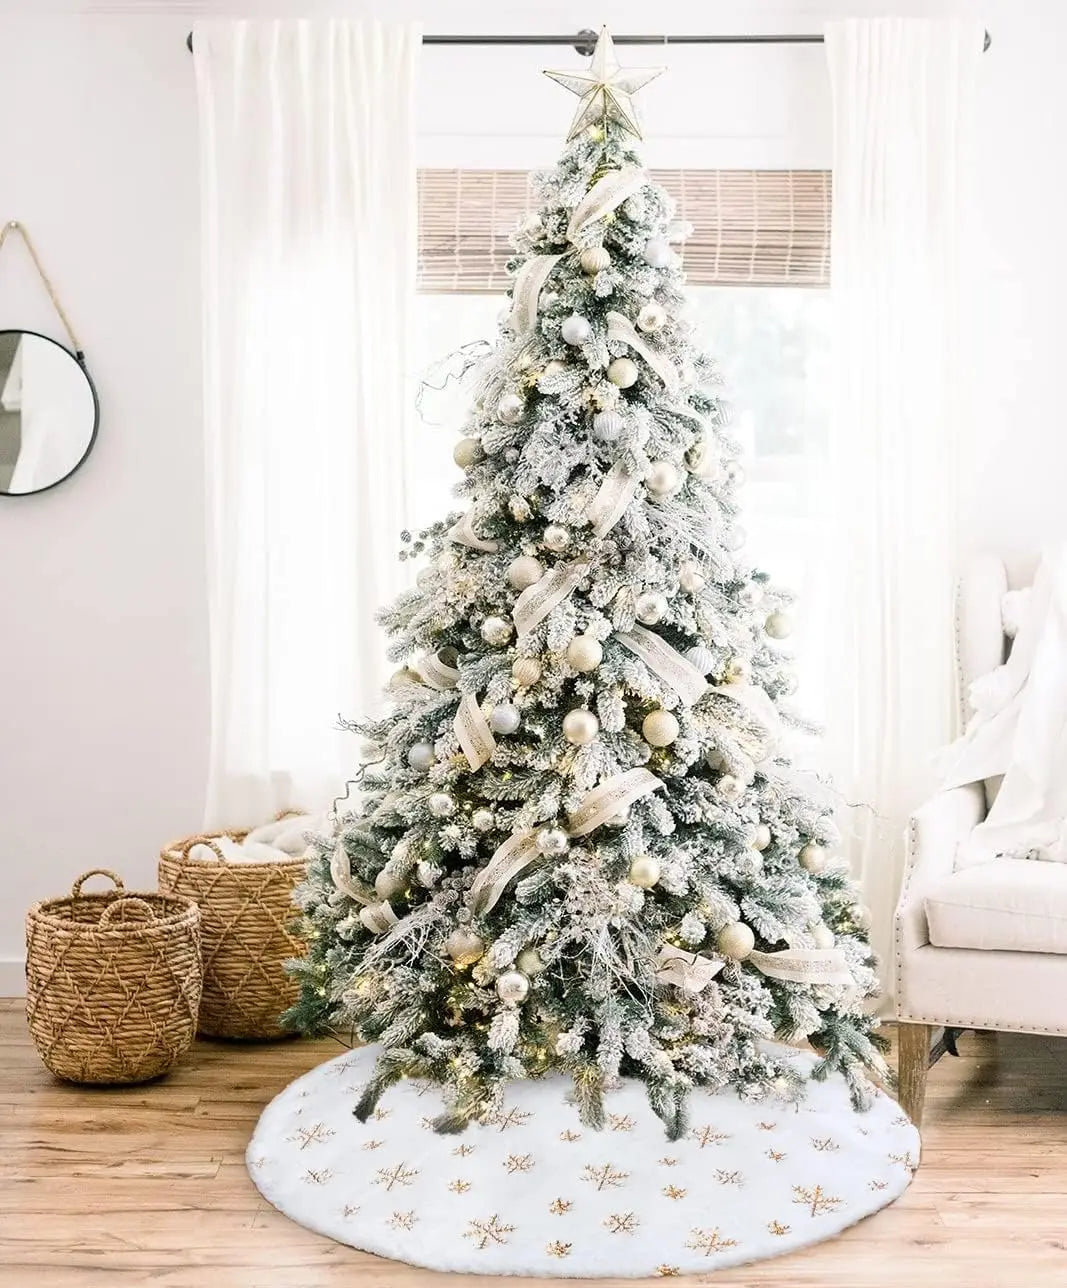 Christmas Tree Skirt White Snowflake 78/90/122 CM